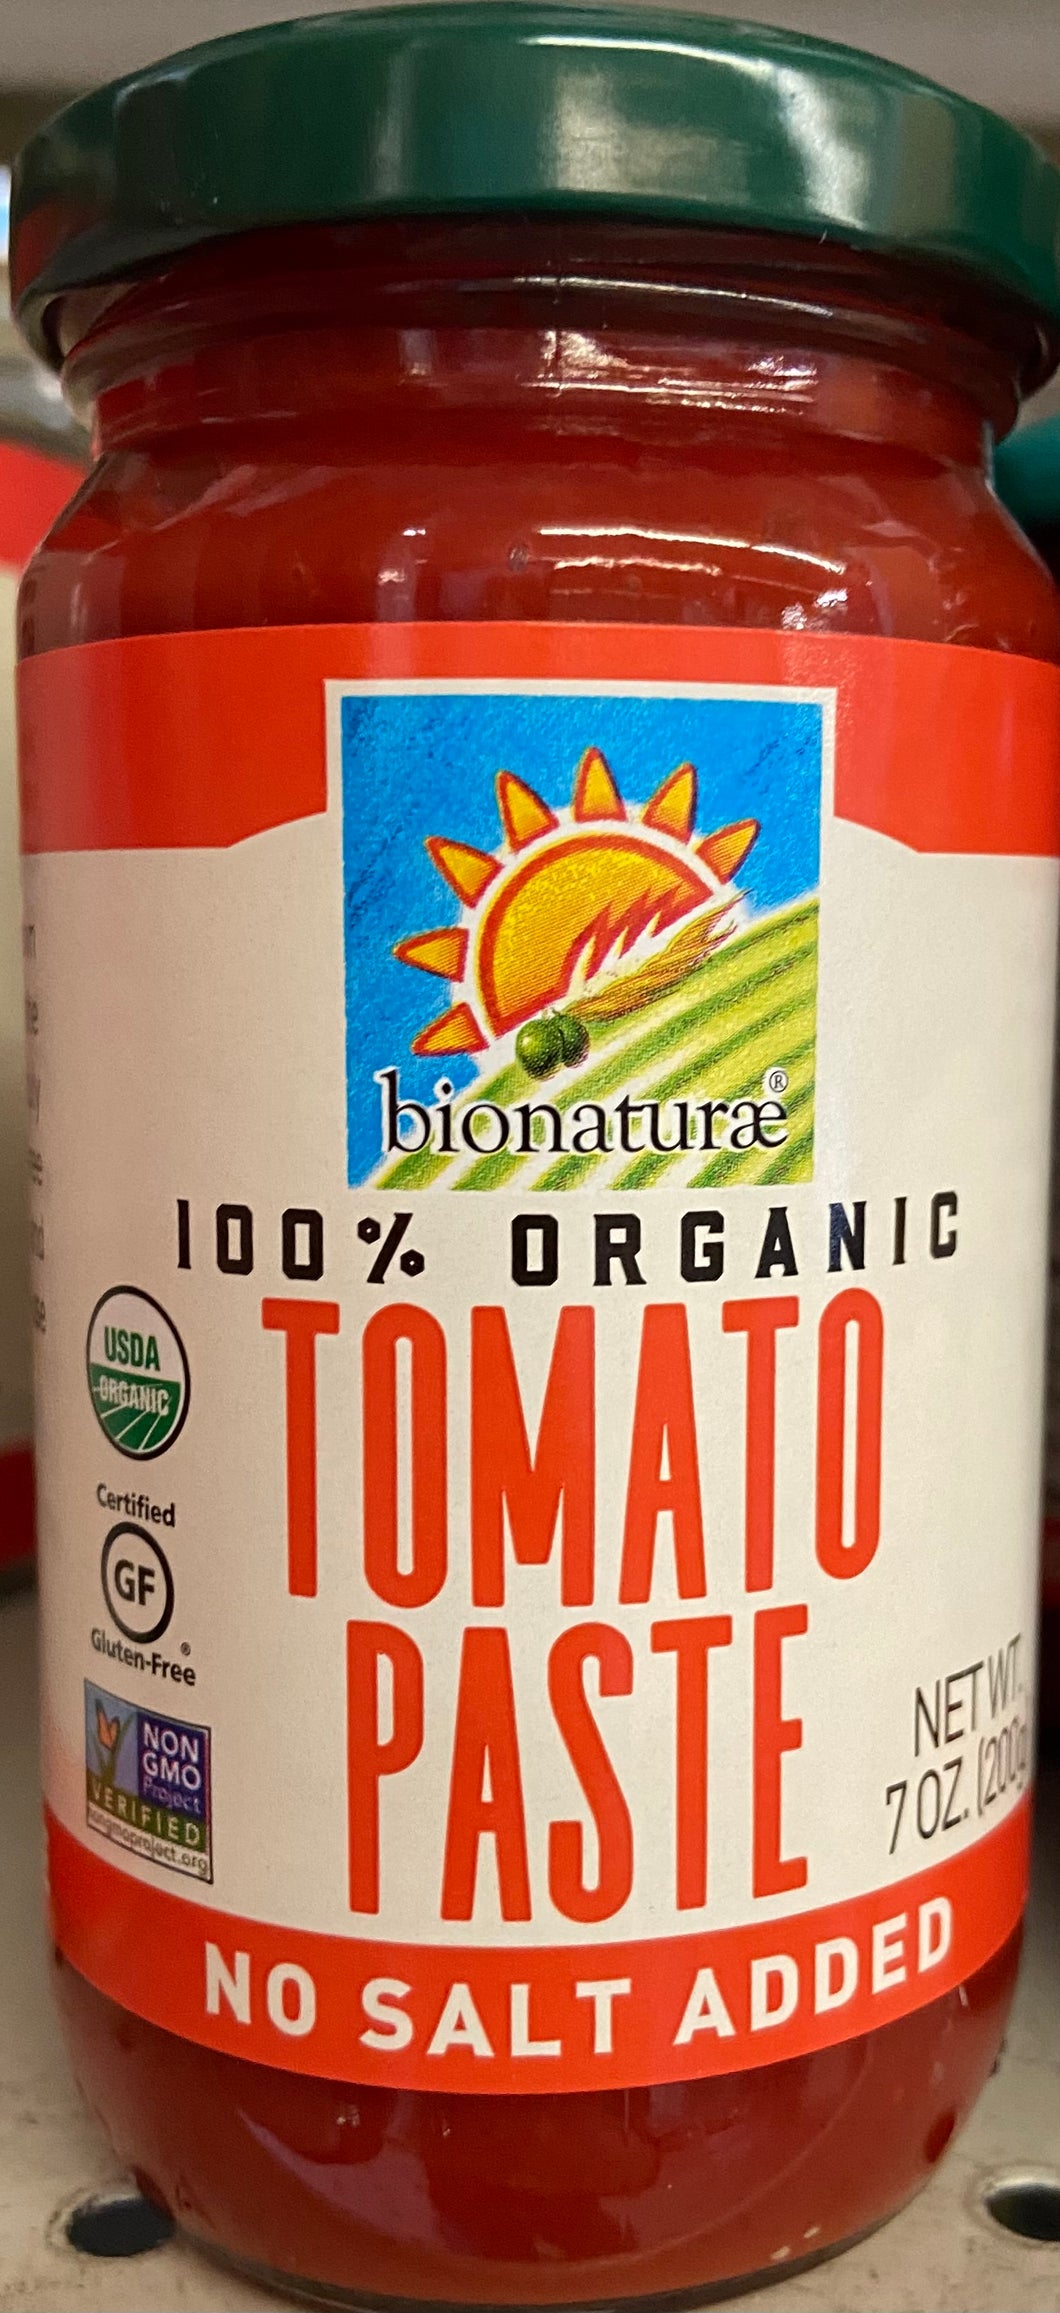 Tomato Paste, No Salt Added Organic, Bionaturae